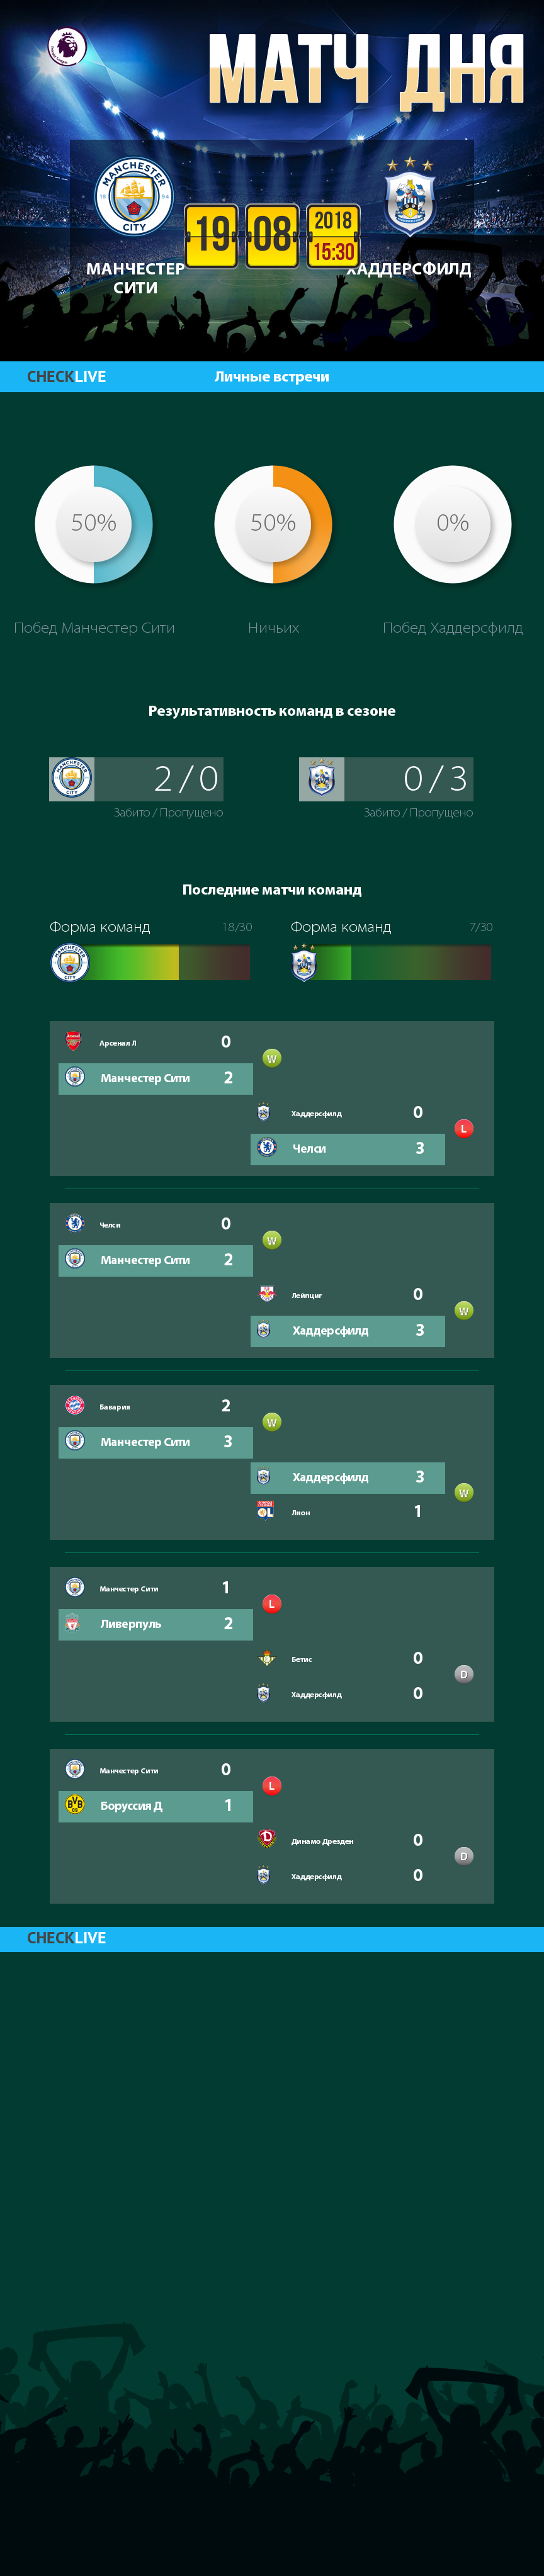 Инфографика Манчестер Сити и Хаддерсфилд матч дня 19.08.2018